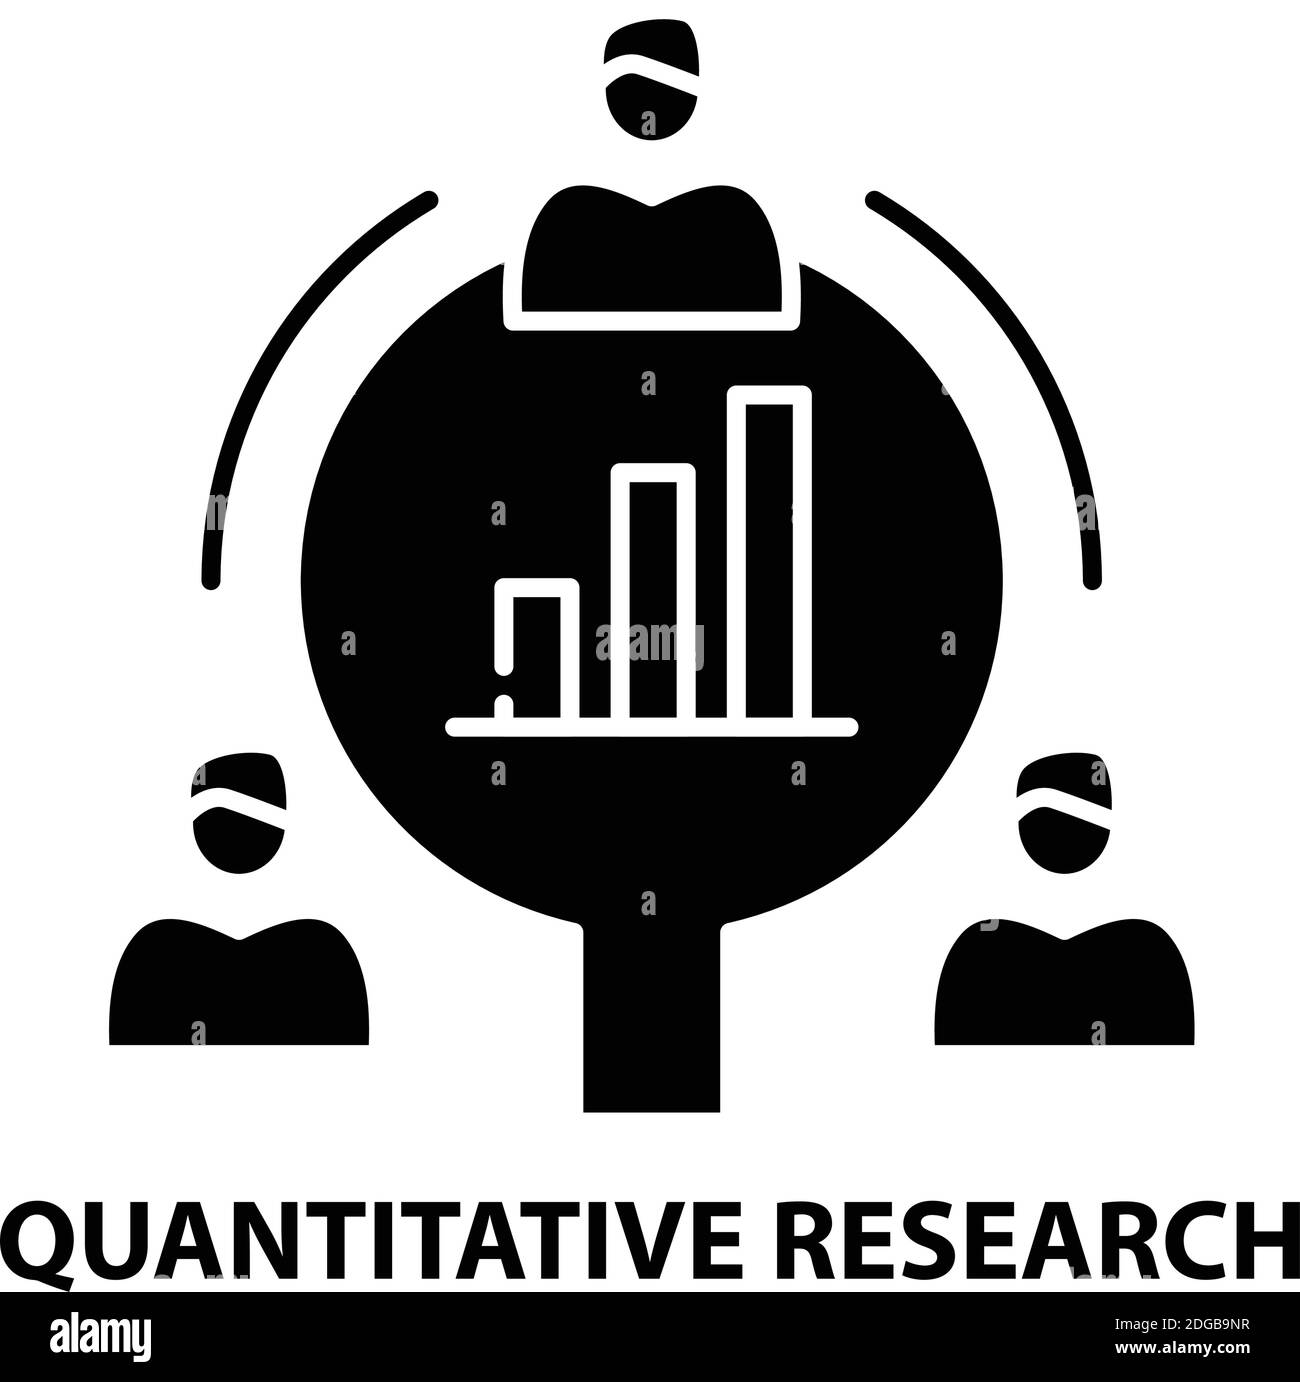 quantitative research icon, black vector sign with editable strokes, concept illustration Stock Vector